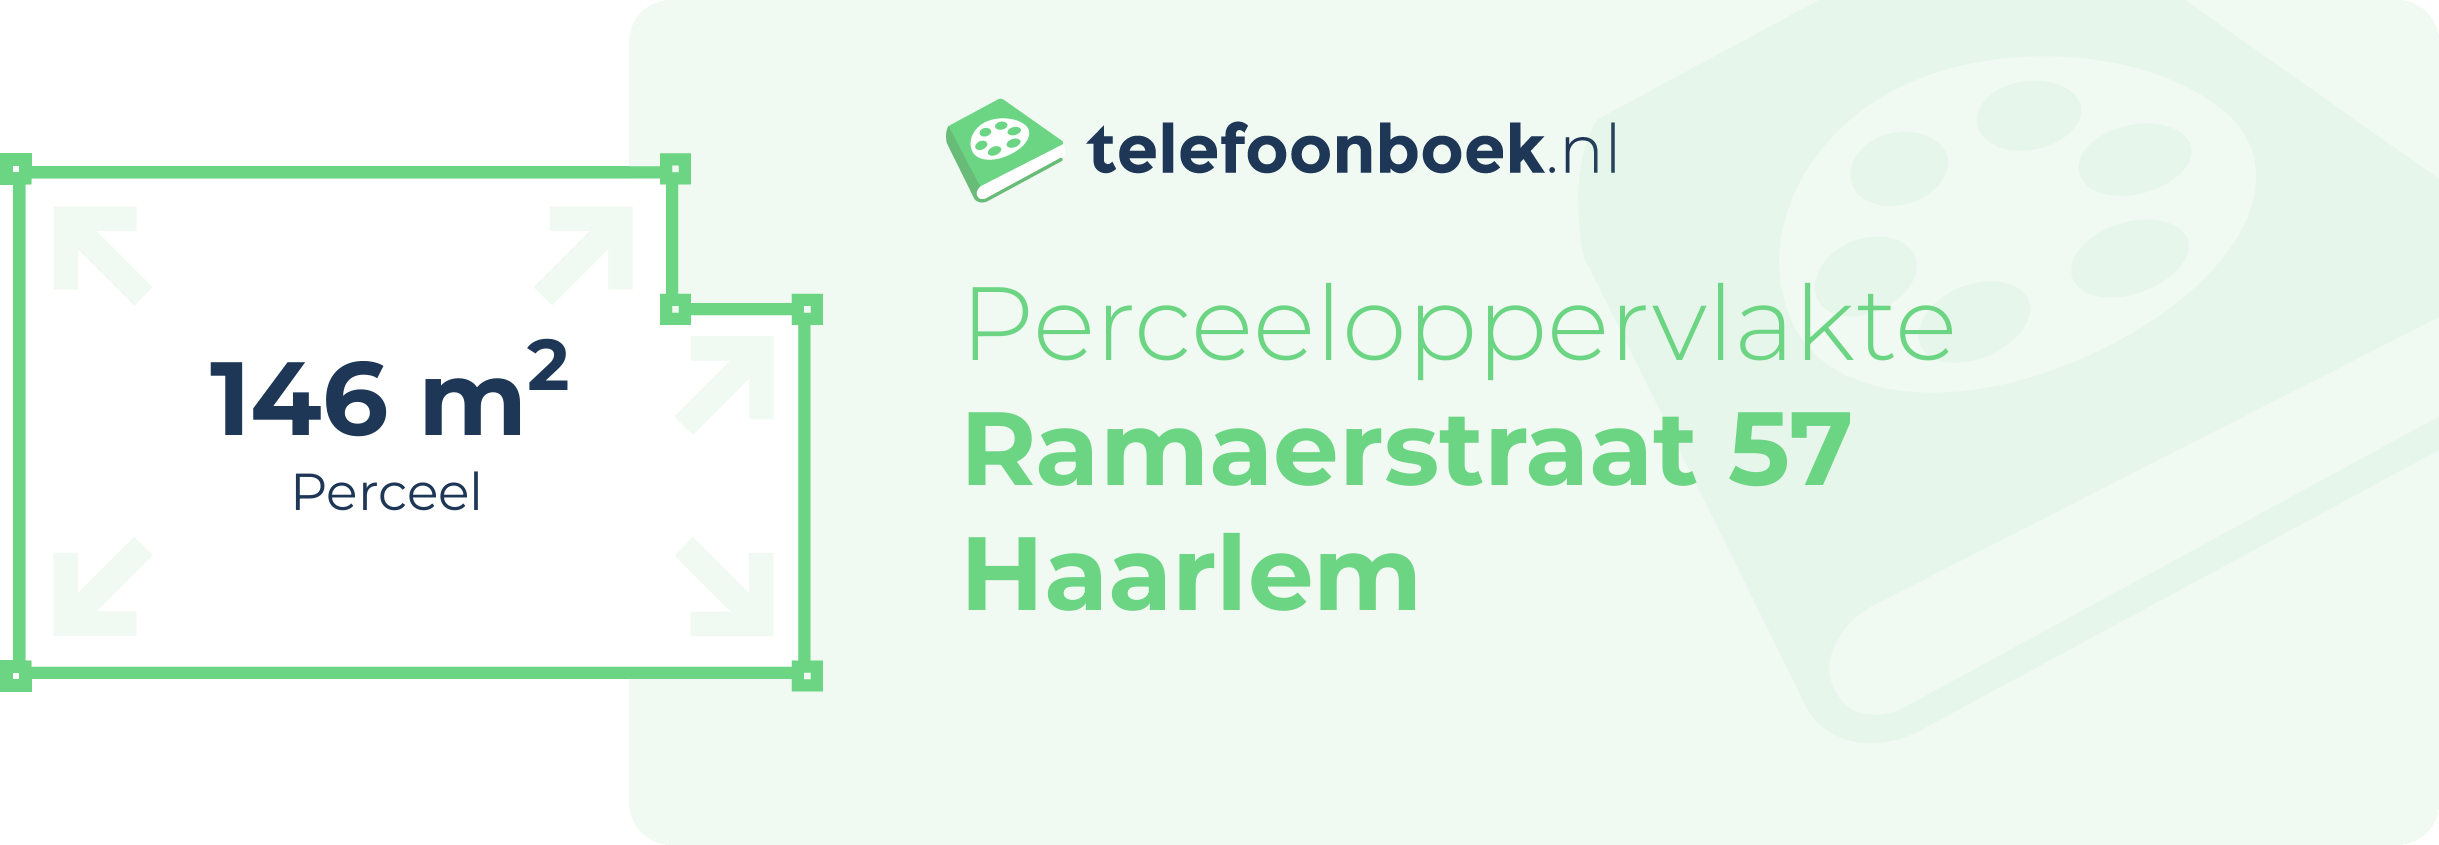 Perceeloppervlakte Ramaerstraat 57 Haarlem